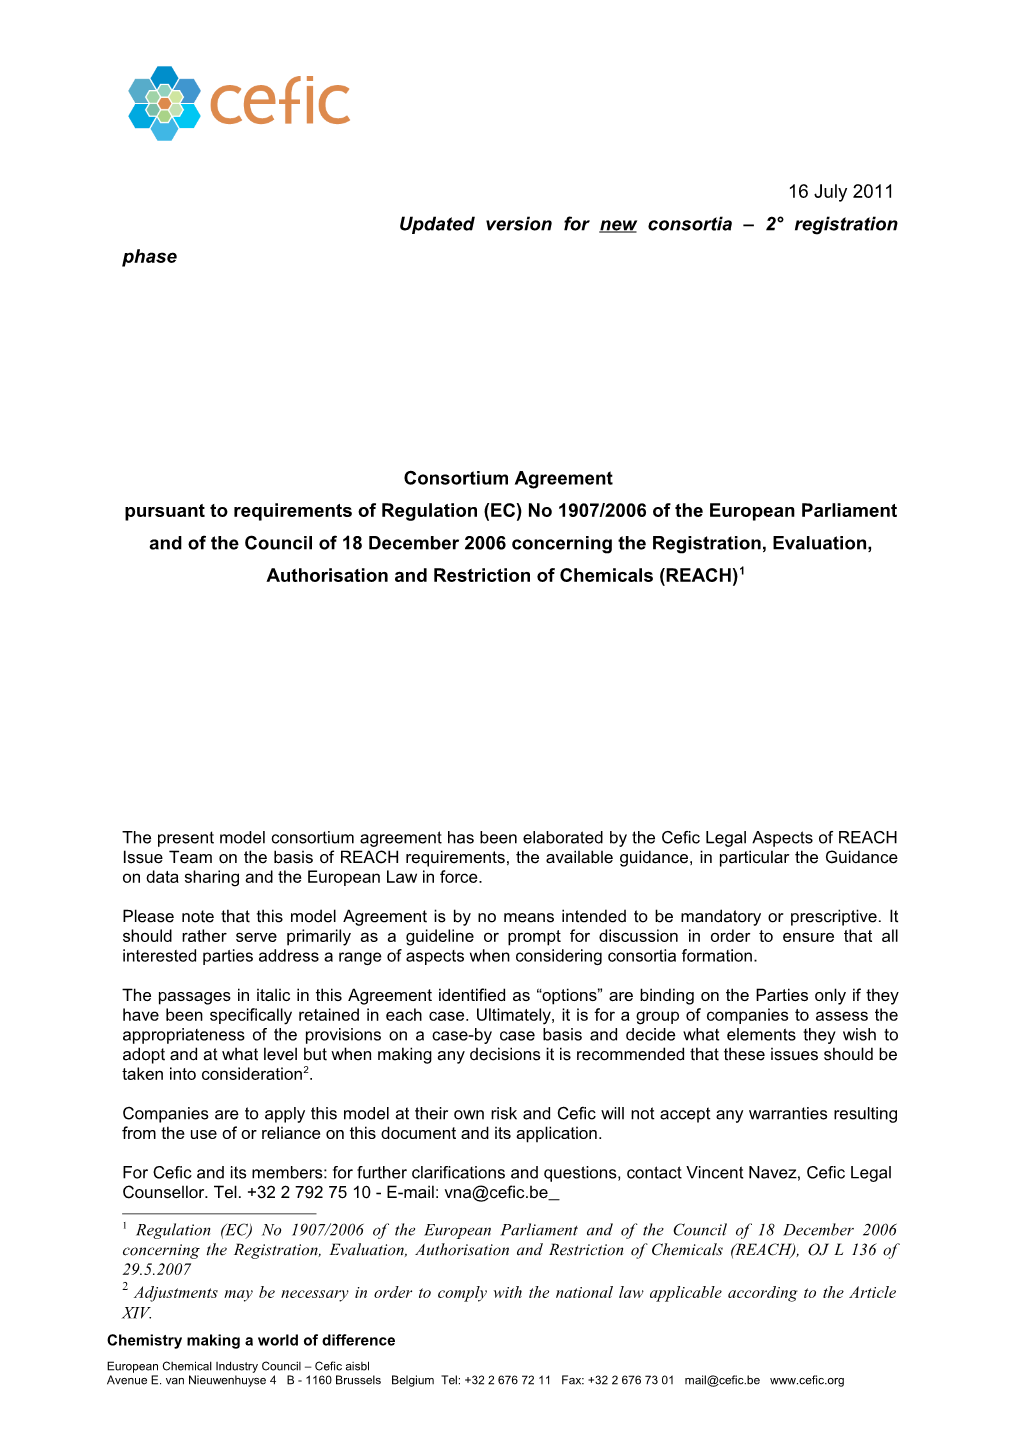 Organisational Agreement of the REACH Consortium